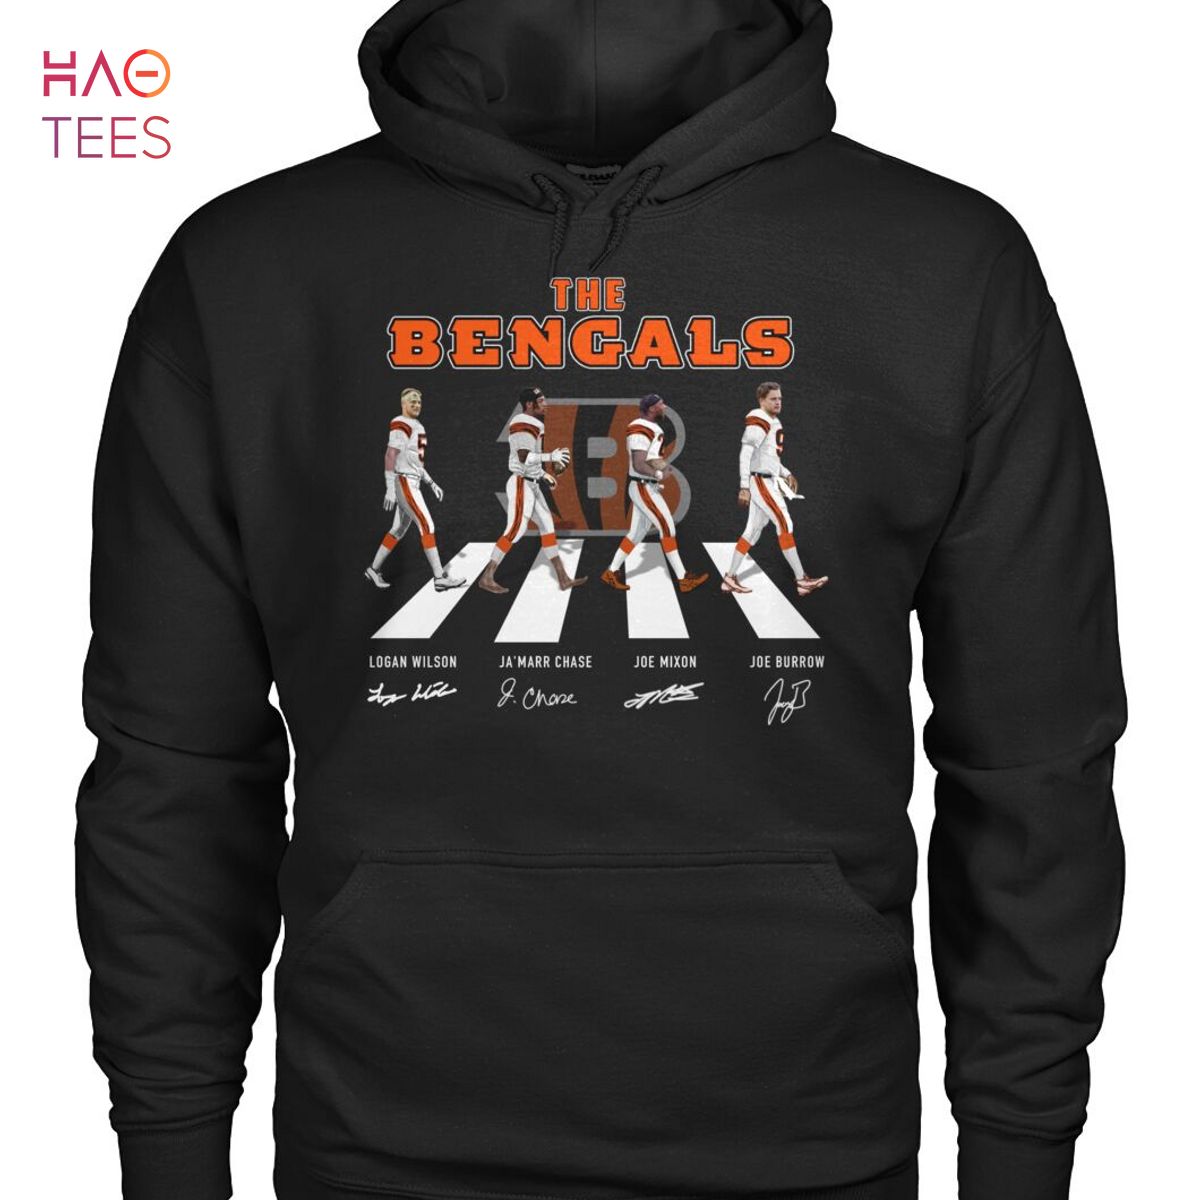 The Cincinnati Bengals Shirt Limited Edition